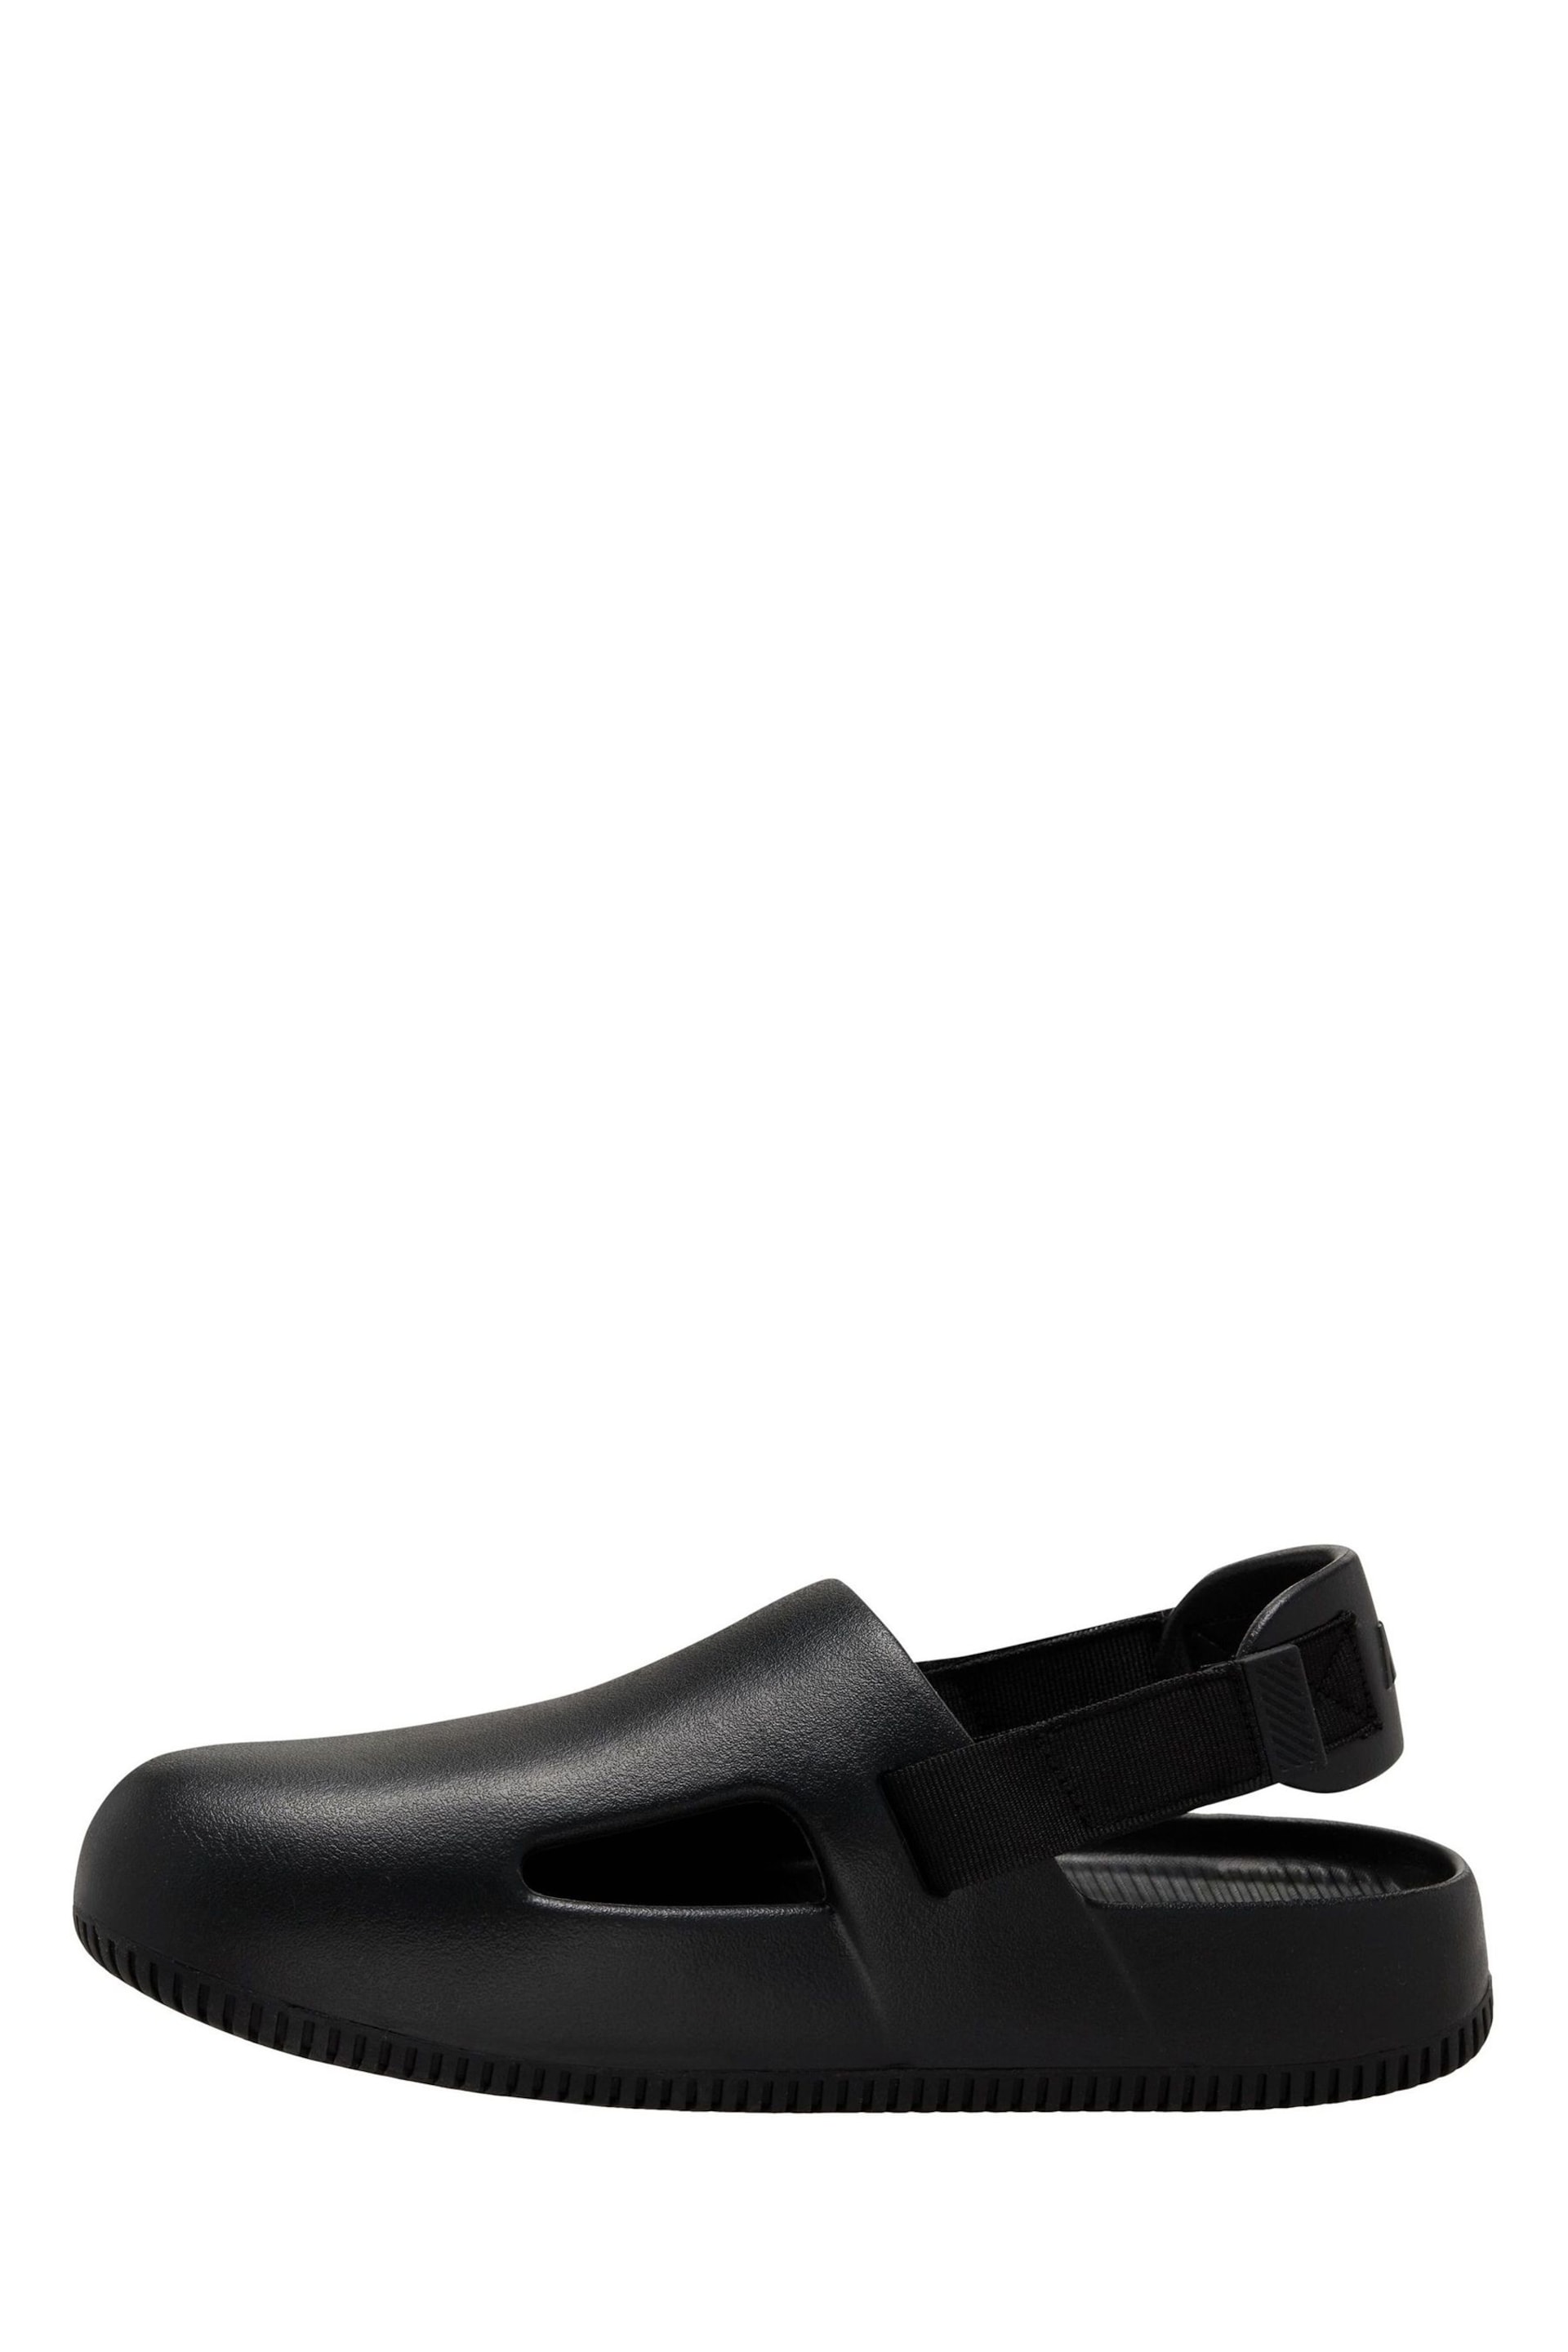 Nike Black Calm Mules Sliders - Image 2 of 6